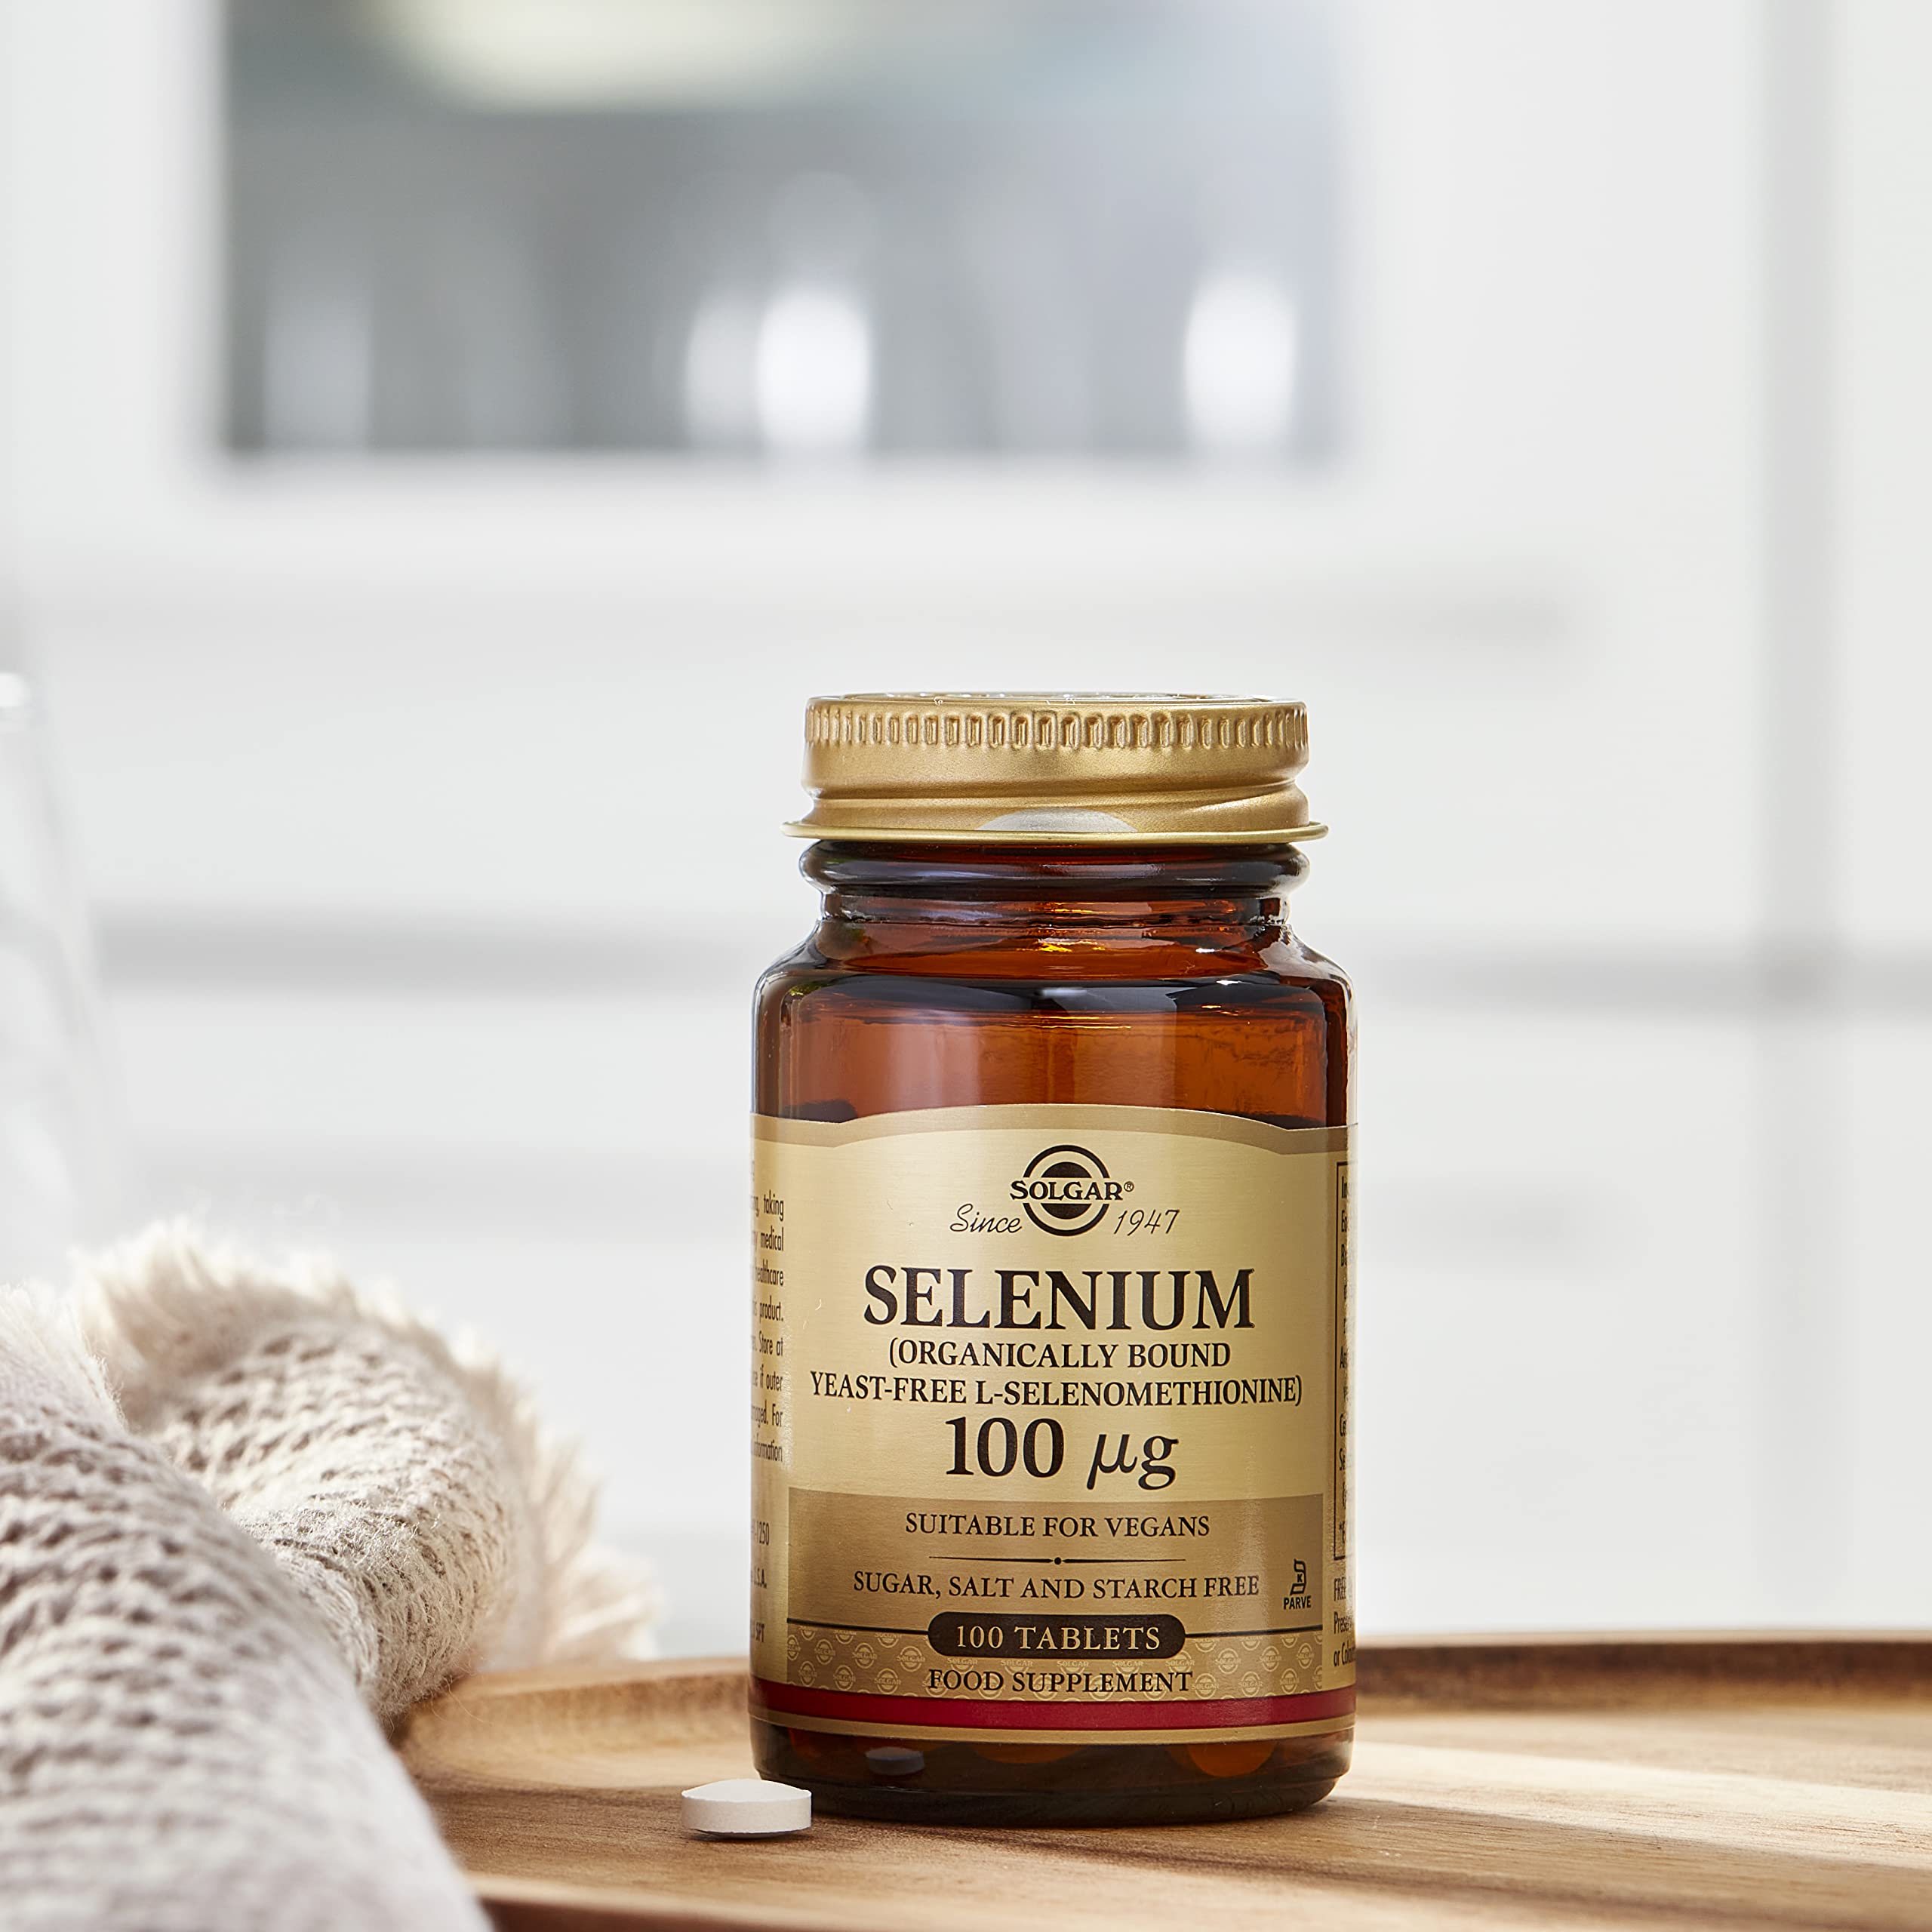 Solgar Yeast-Free Selenium 100 mcg, 100 Tablets - Supports Antioxidant & Immune System Health - Non-GMO, Vegan, Gluten Free, Dairy Free, Kosher - 100 Servings